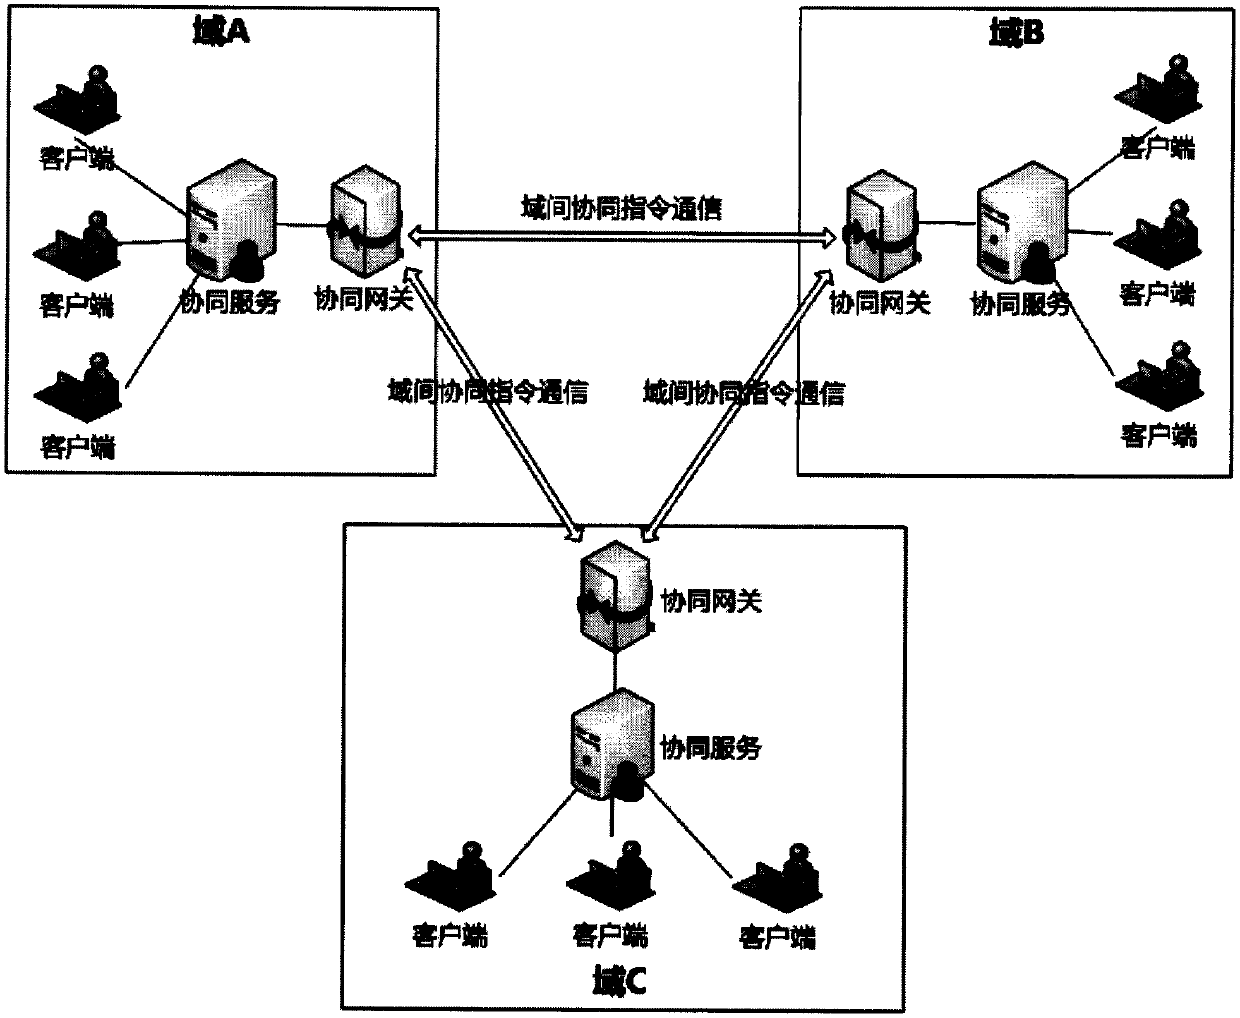 Cross-domain collaborative interaction method based on collaborative gateway